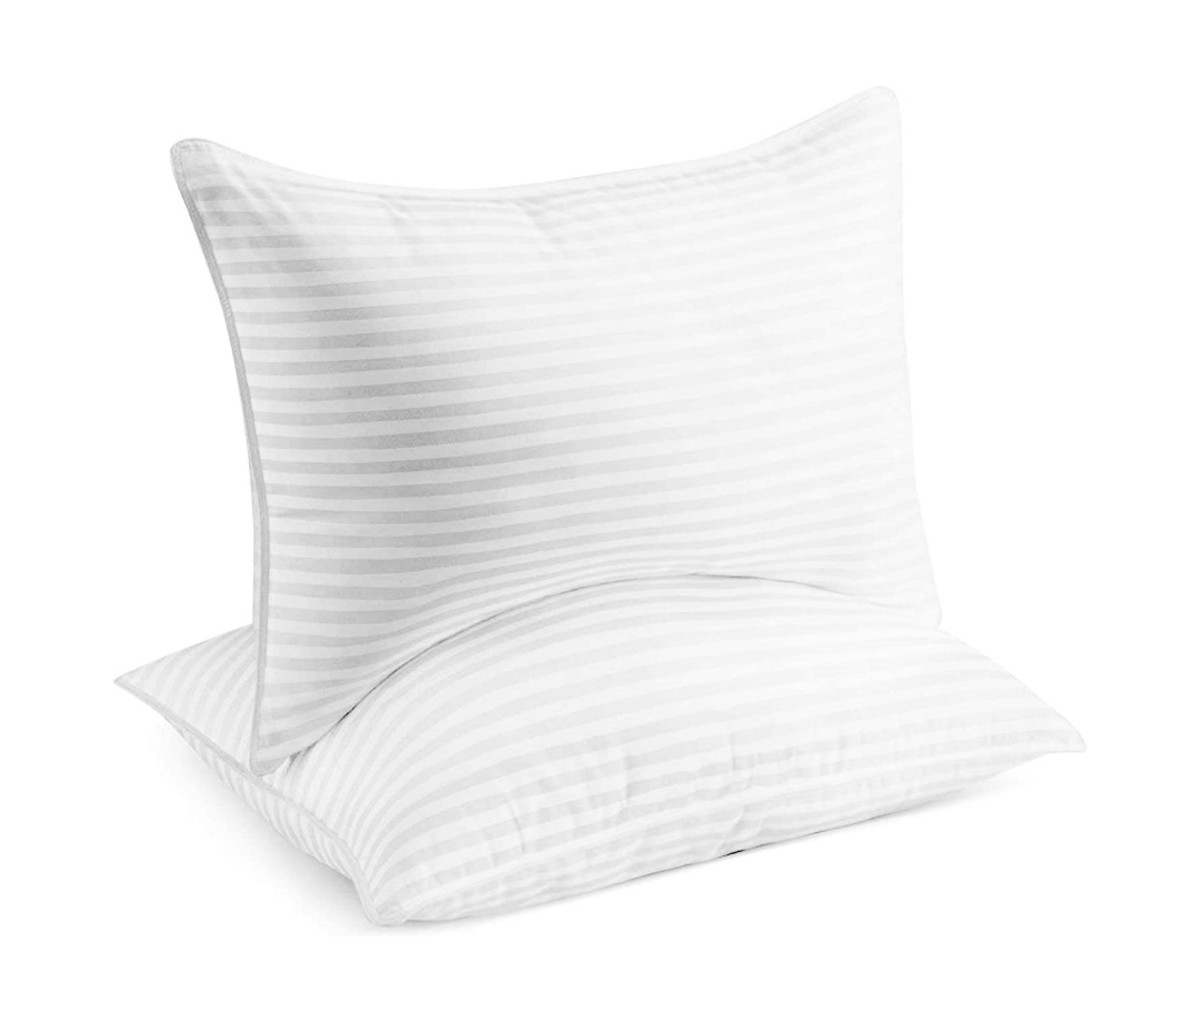 Beckham Hotel Collection Gel Pillow Review - The Pillow Report